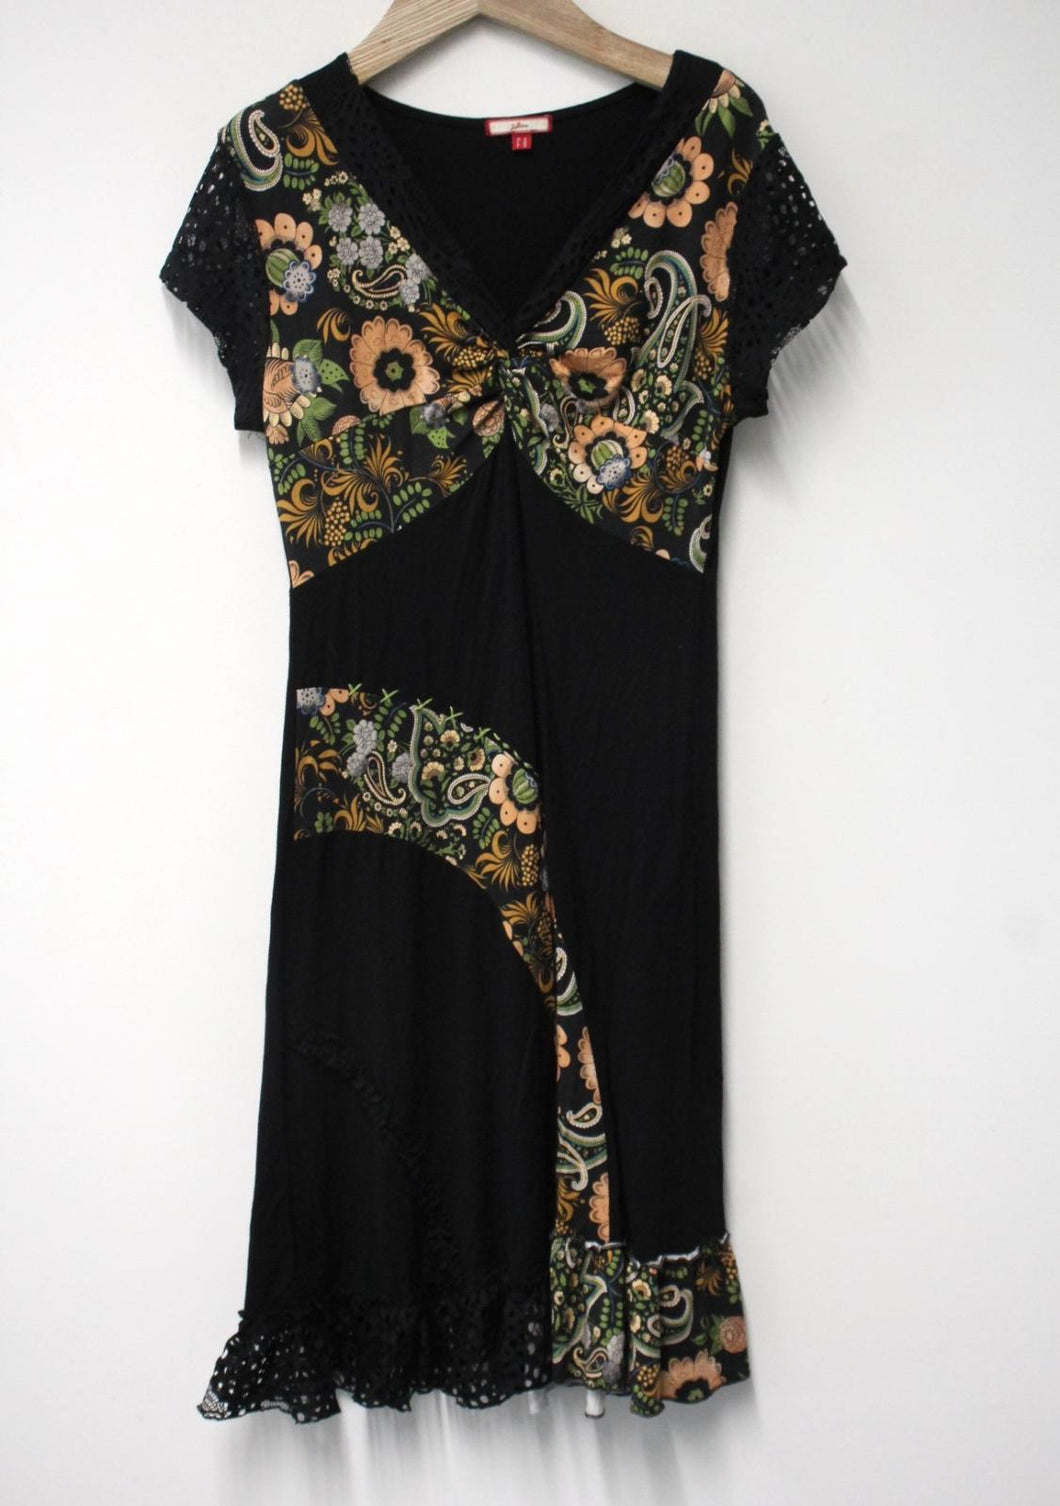 JOE BROWNS Ladies Black Floral Print Lace Trim Knee Length Dress Size UK14